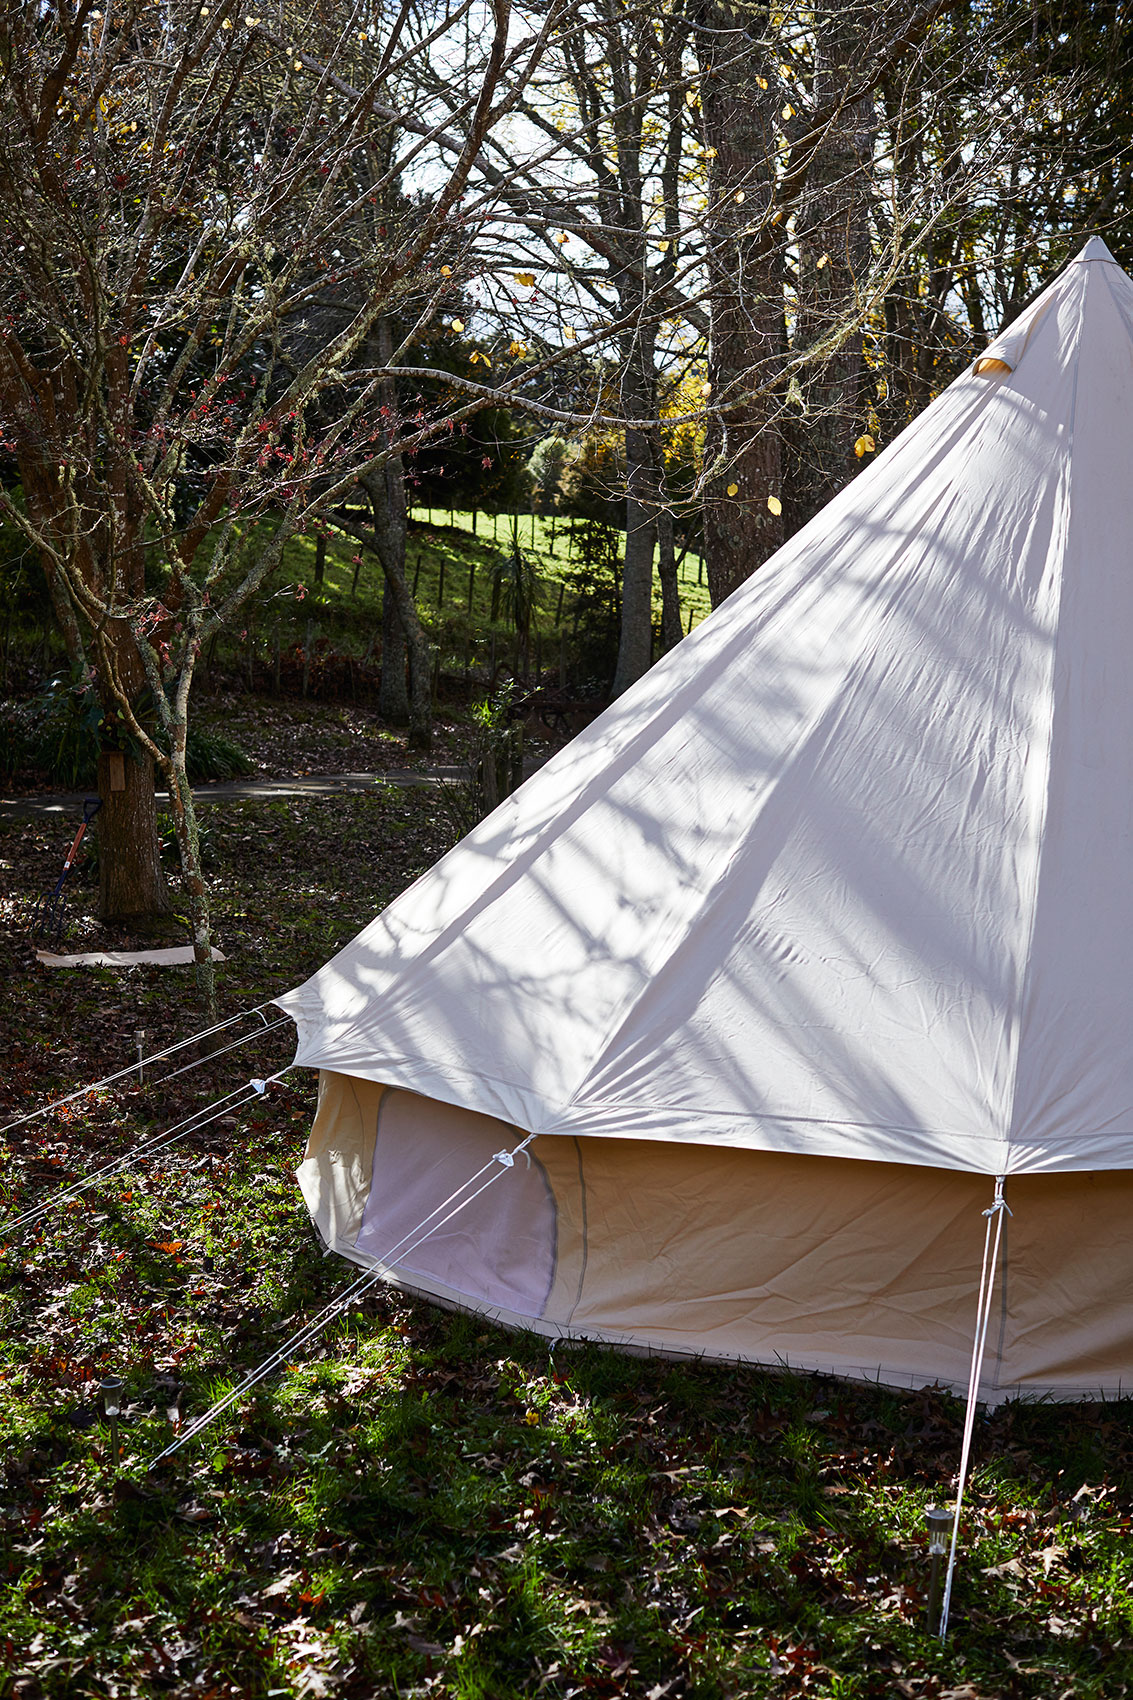 Hiakai • Round Canvas Tent in New Zealand Garden • Lifestyle & Hospitality Food Photography